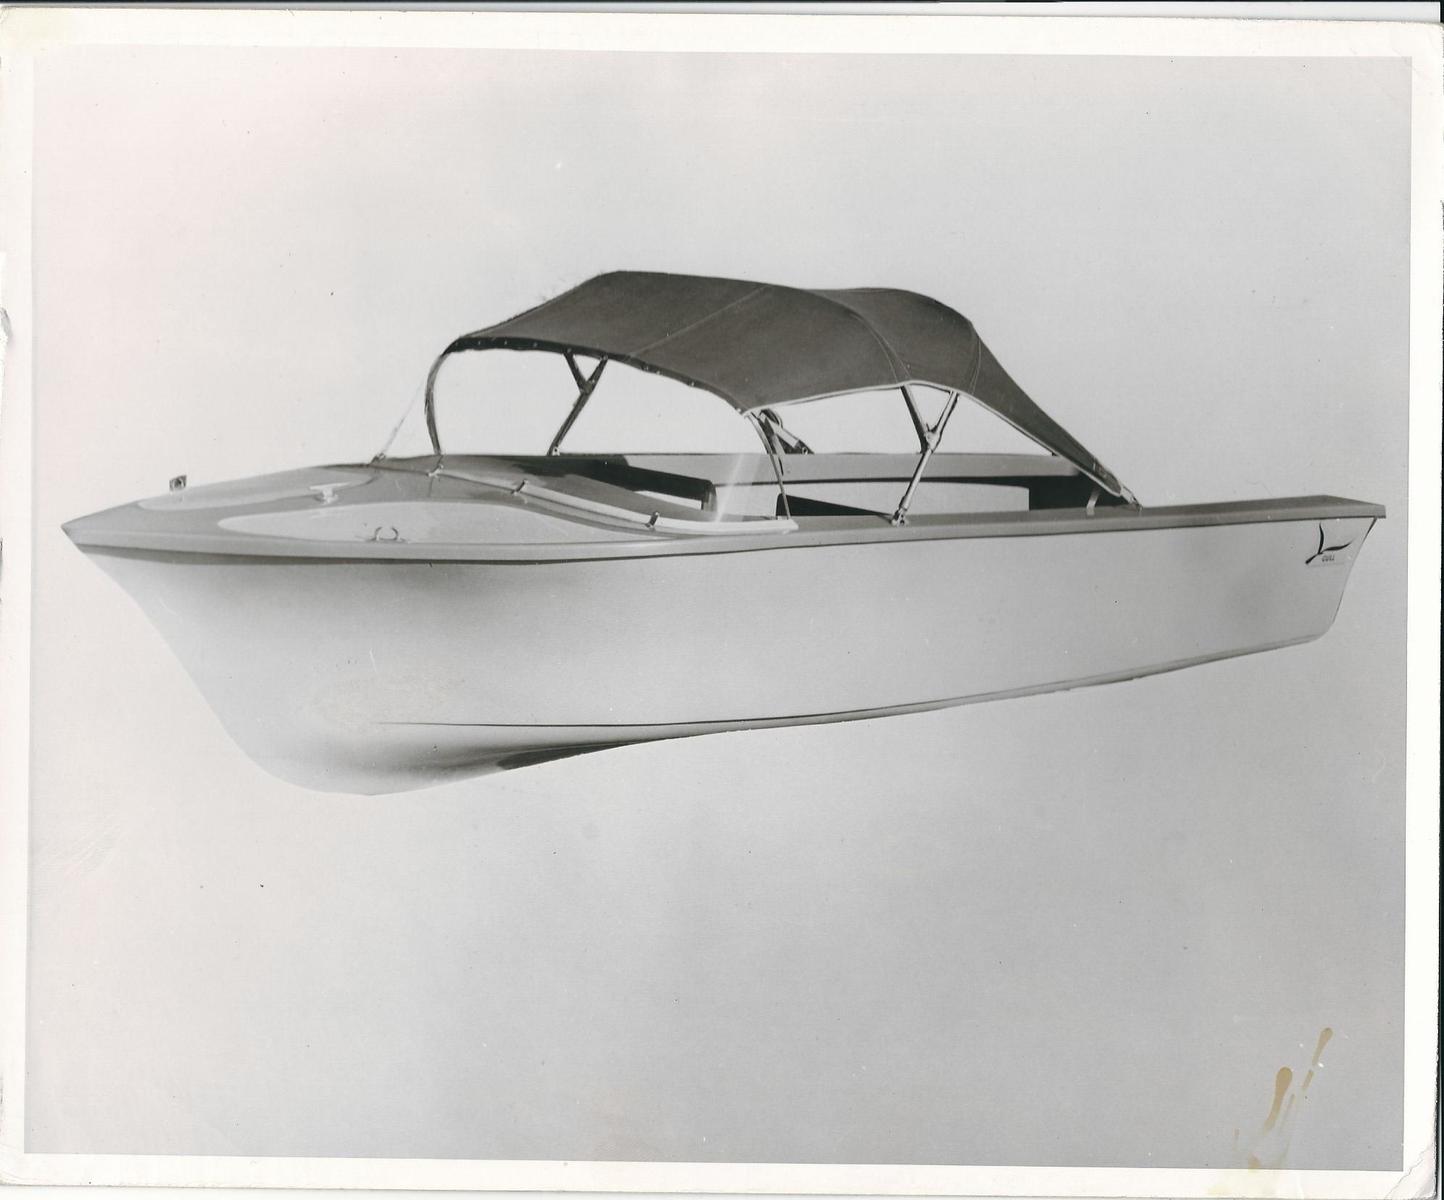 Gull Boats & RV old photos